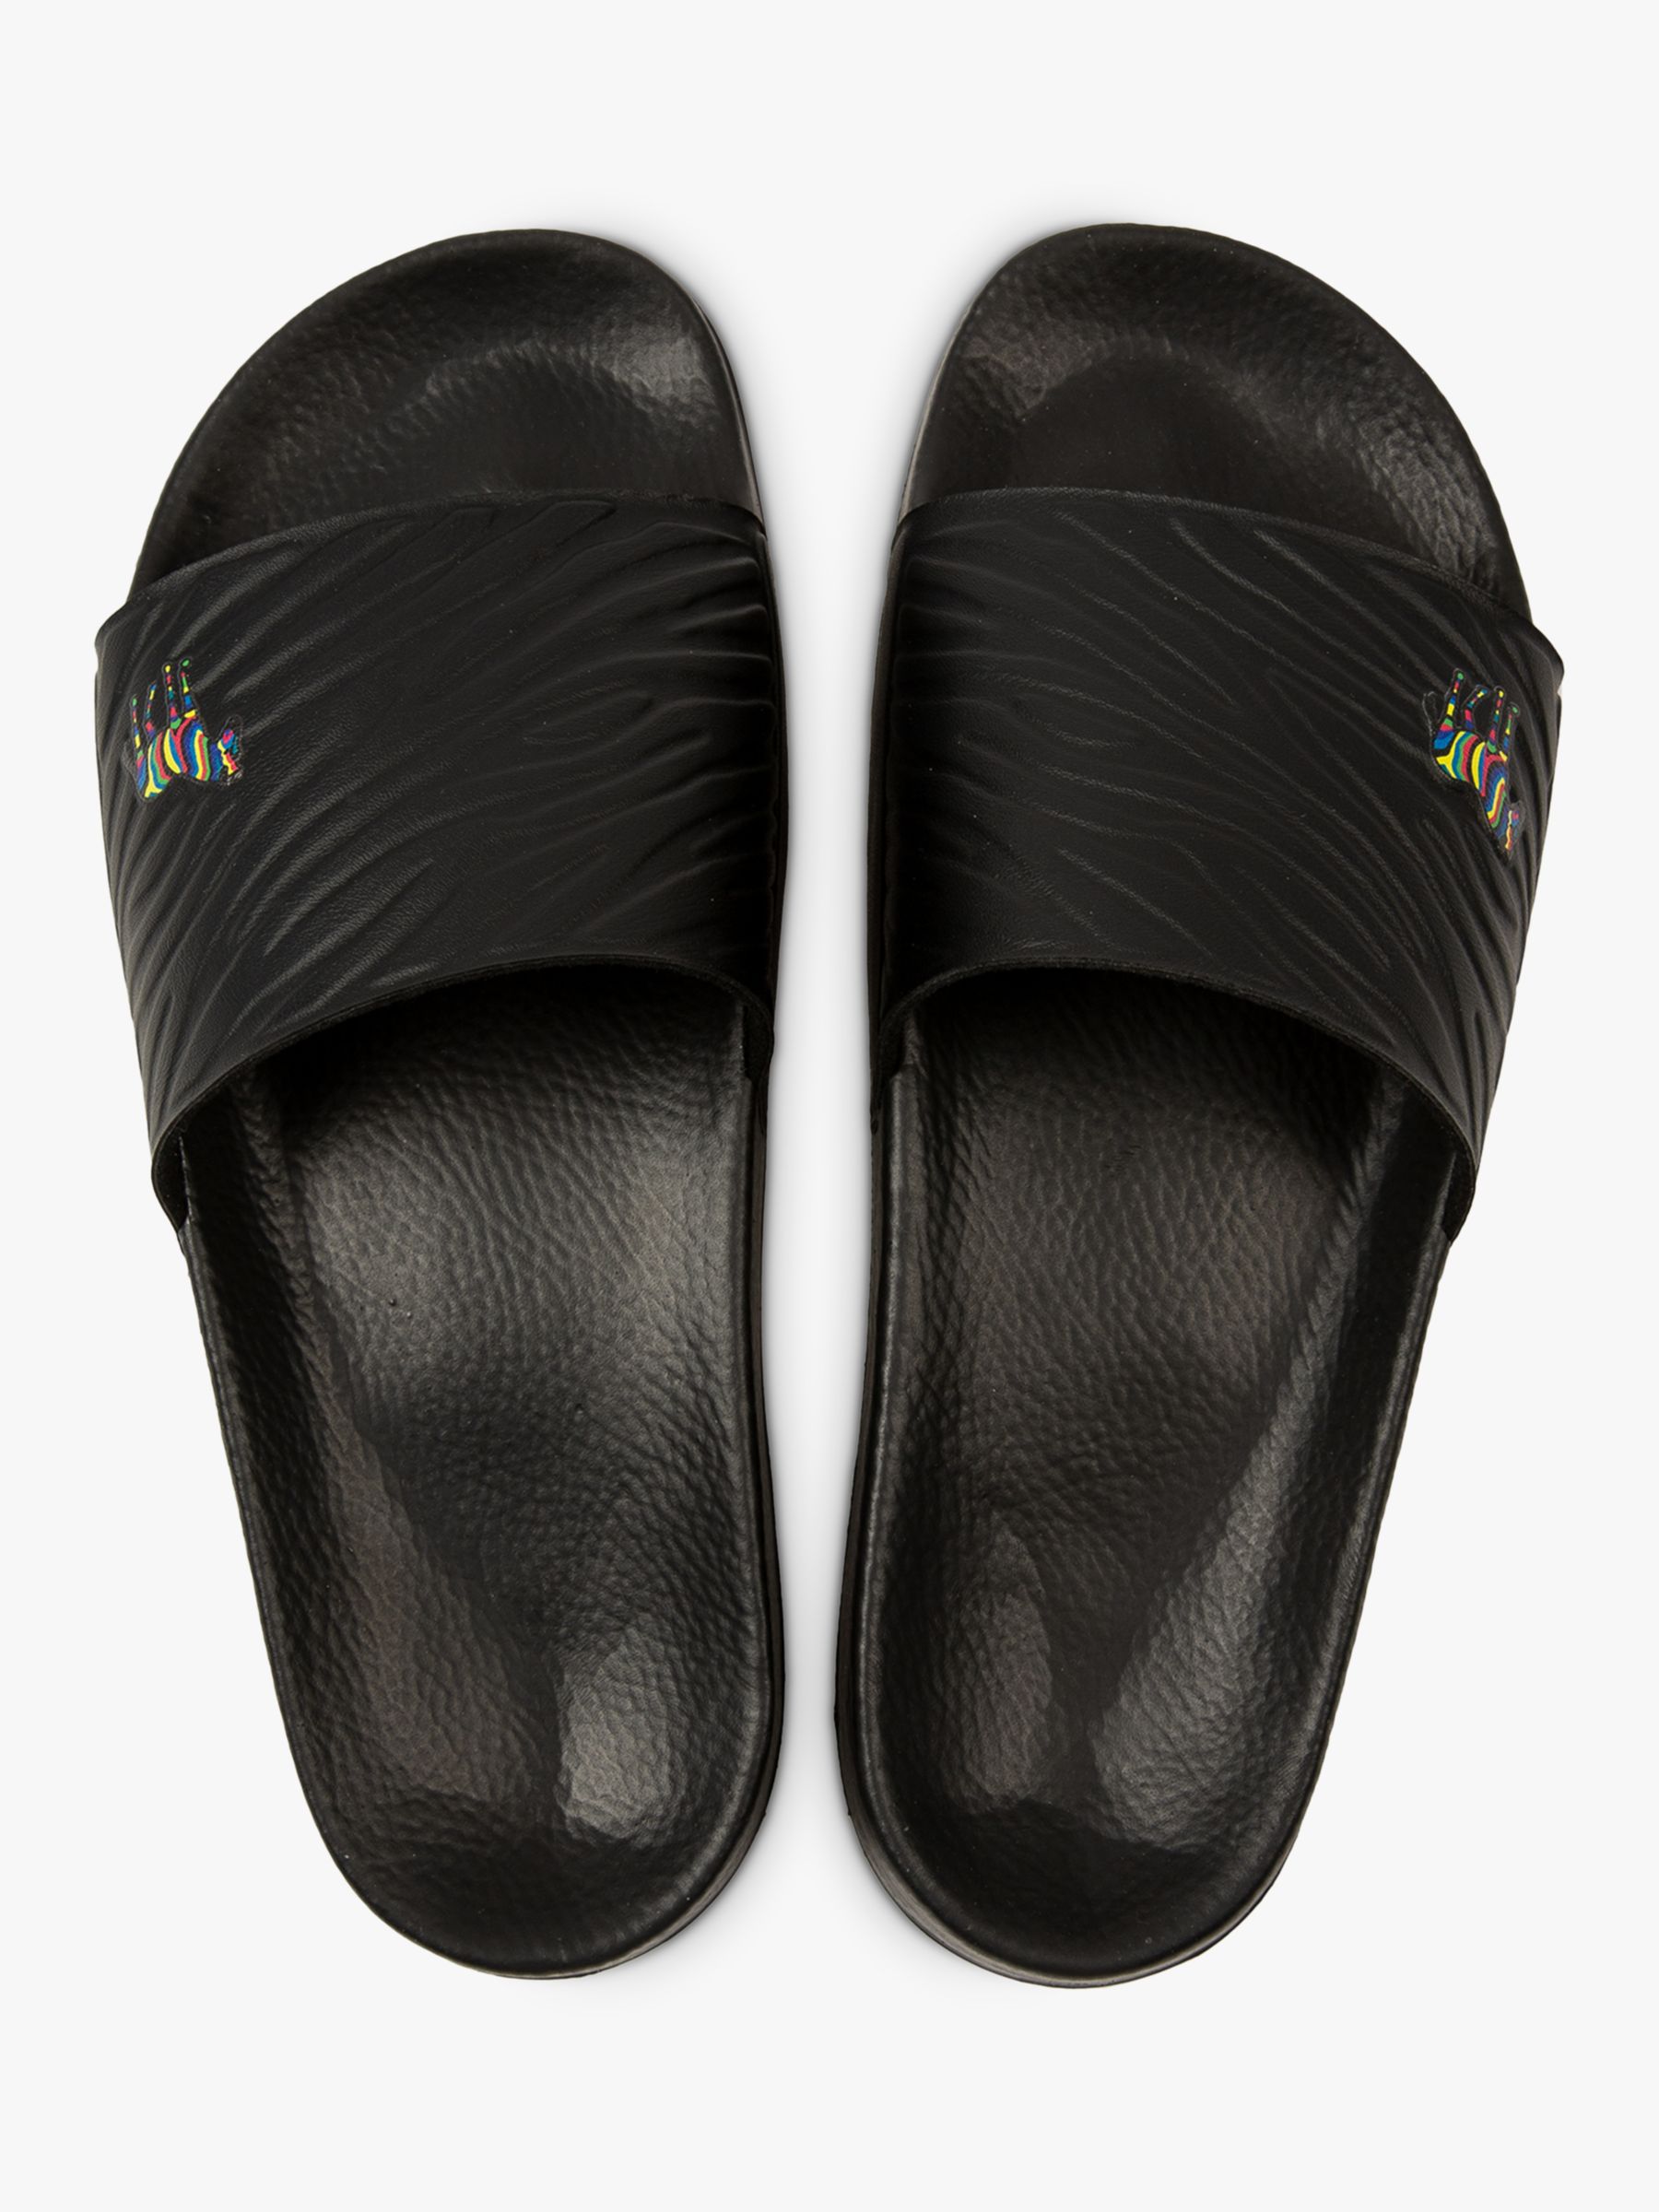 Paul Smith Nyro Slider Sandals, Black, 9